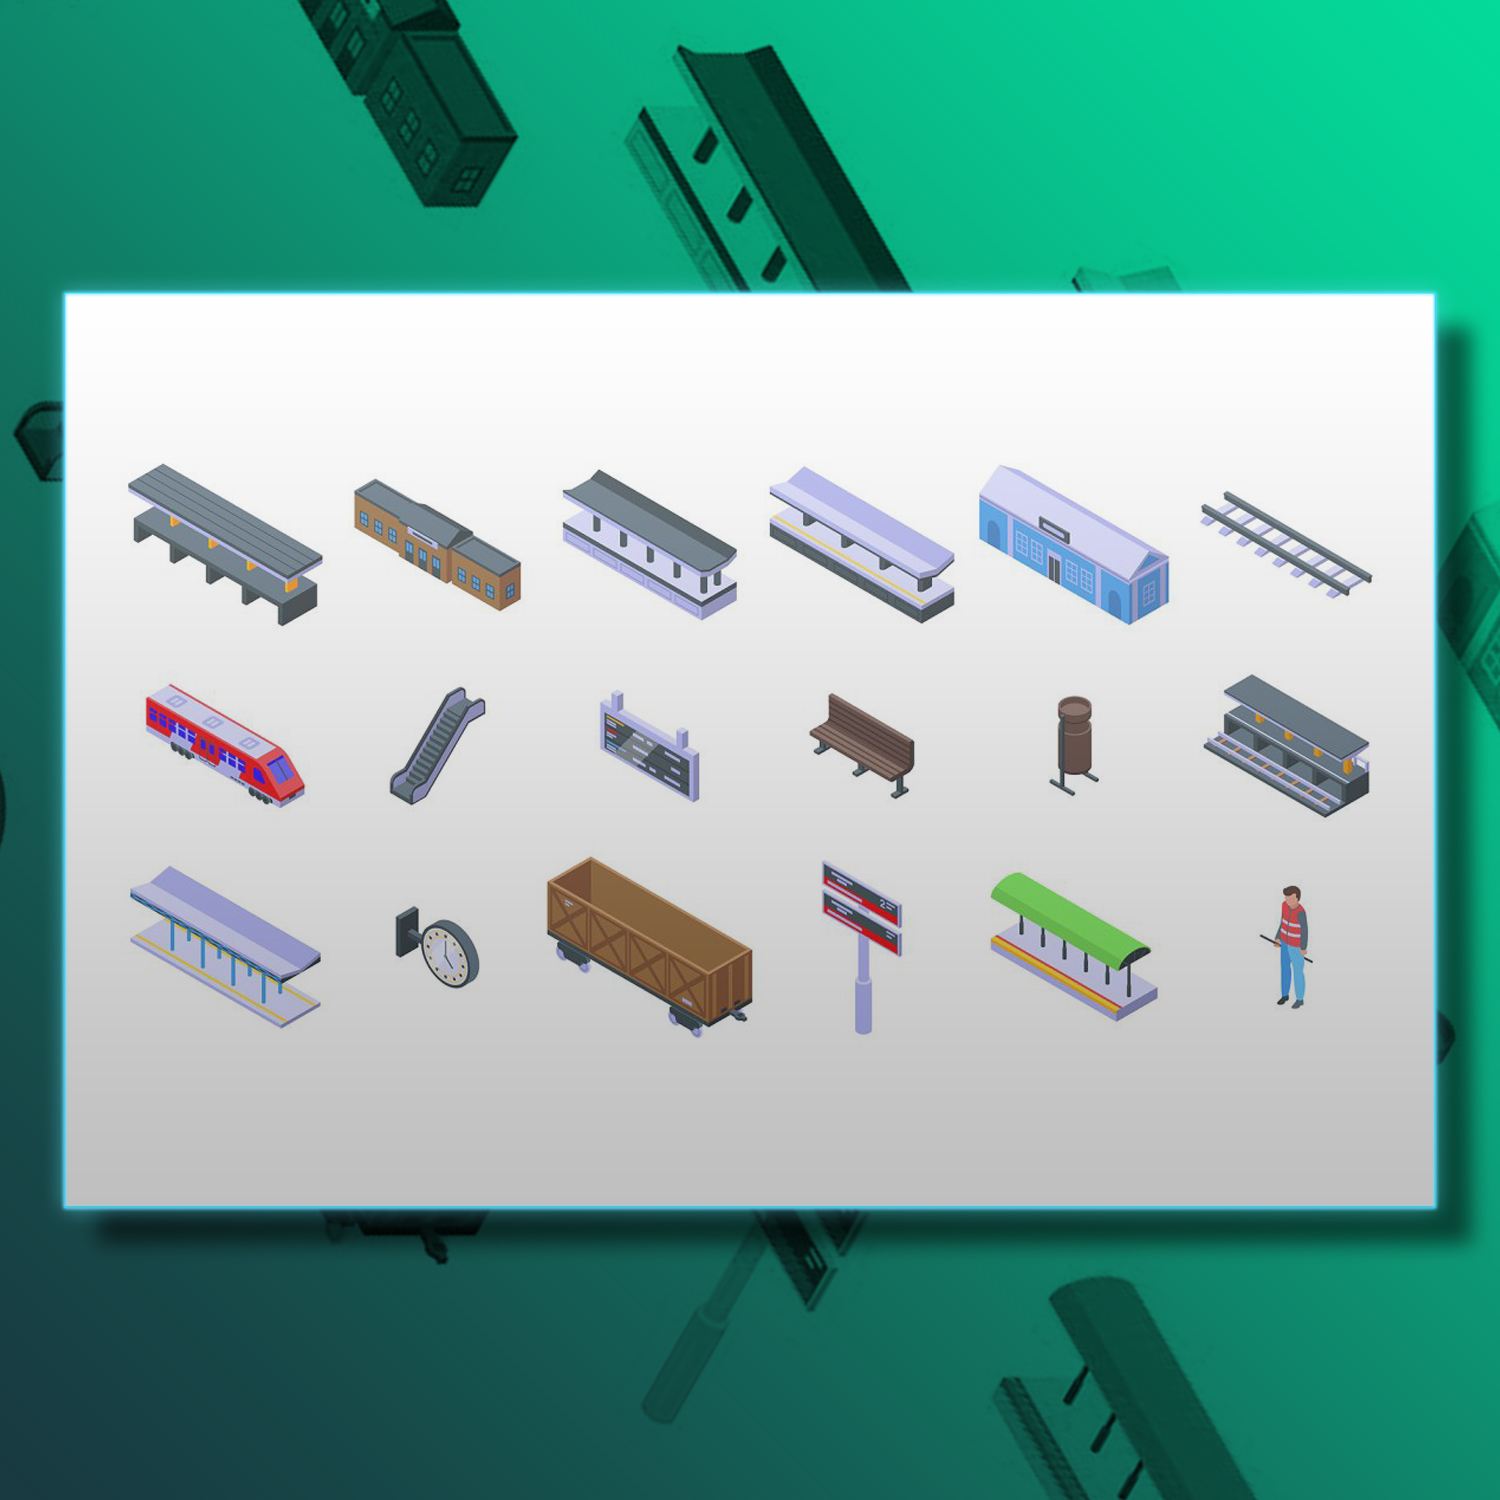 Images preview 9 railway platform icons set.